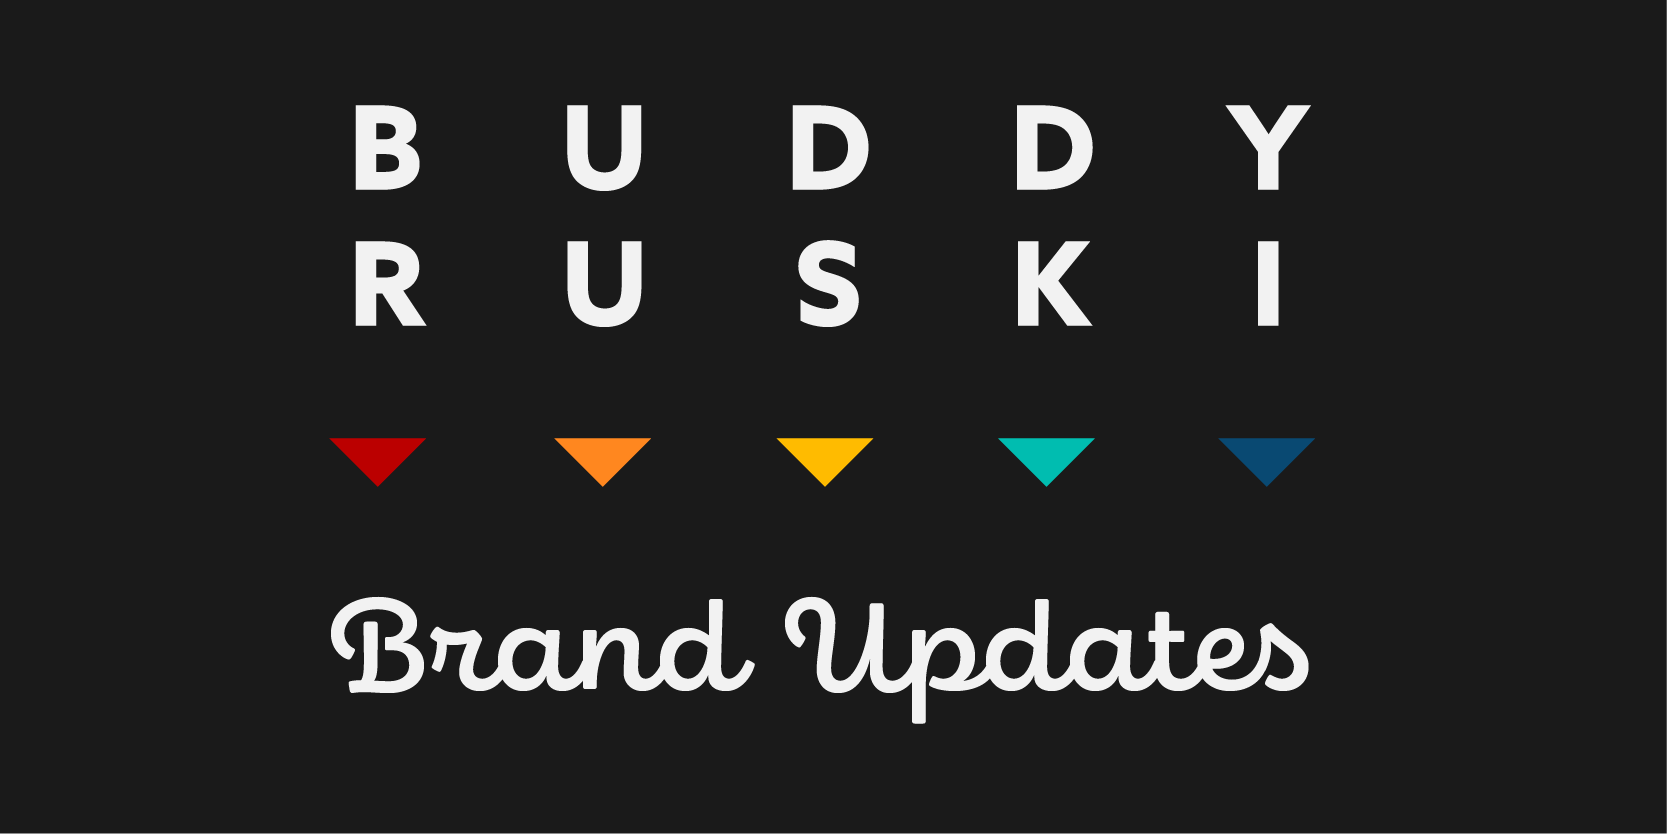 An Inside Look At The New Buddy Ruski Branding